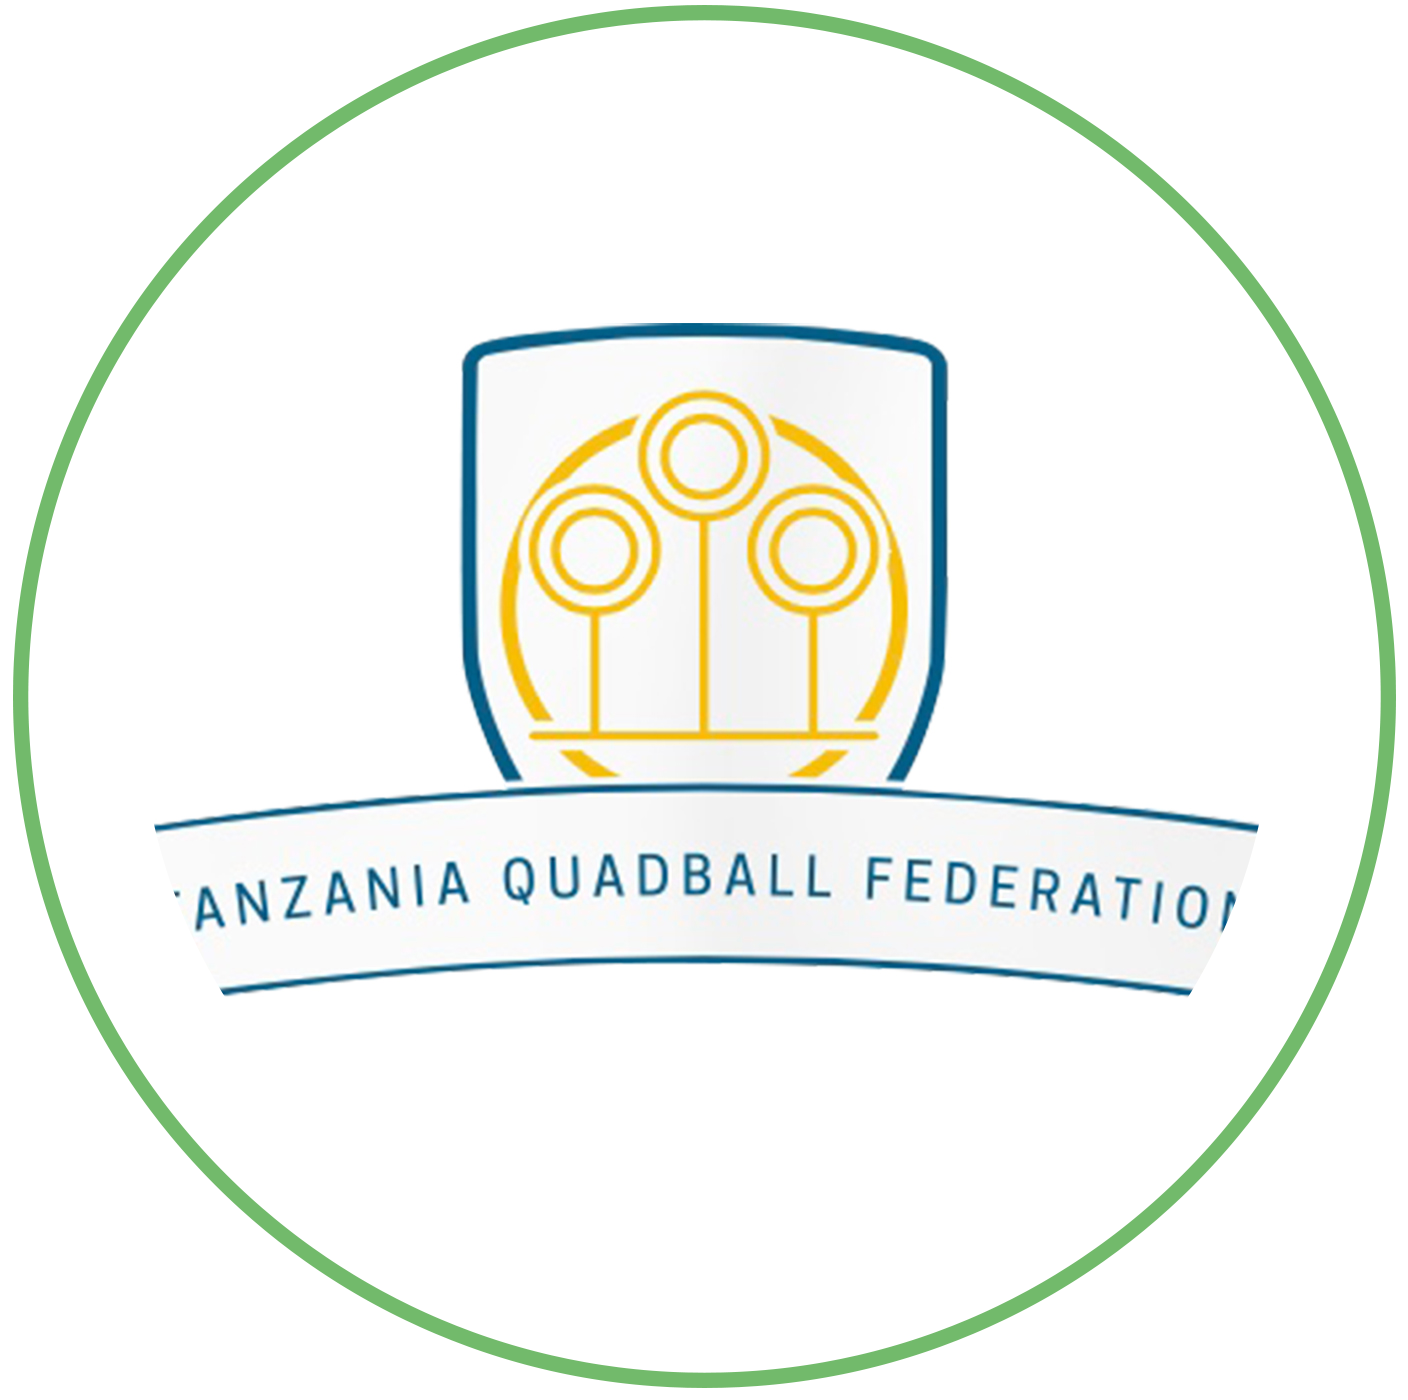 Tanzania Quadball logo